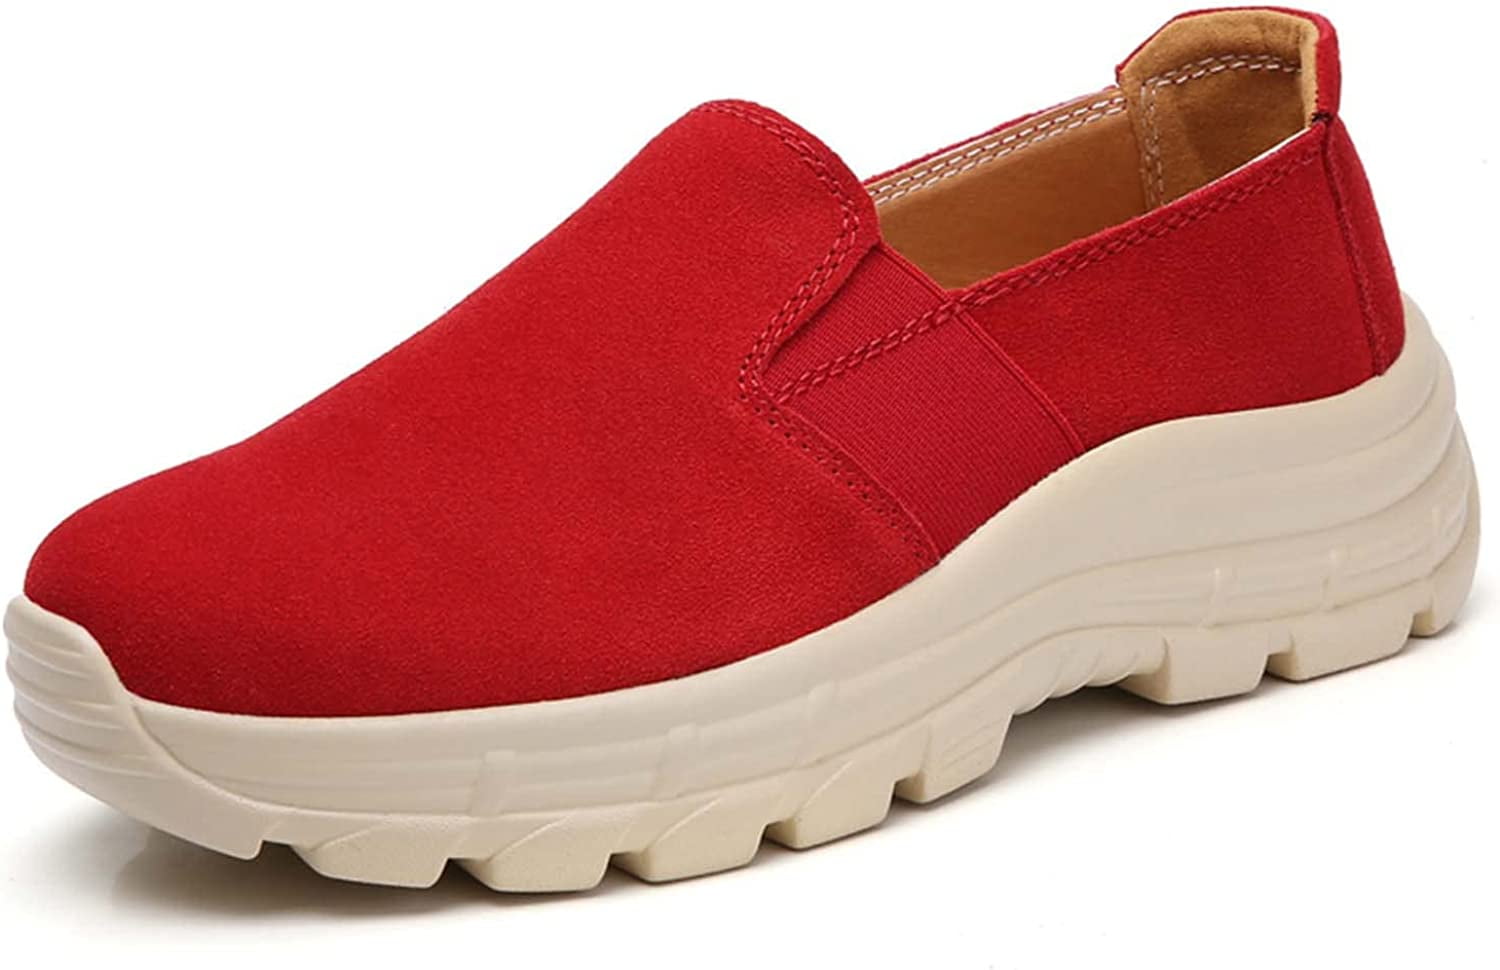 Women's Platform Slip-On Loafers Fashion Casual Walking Shoe ...